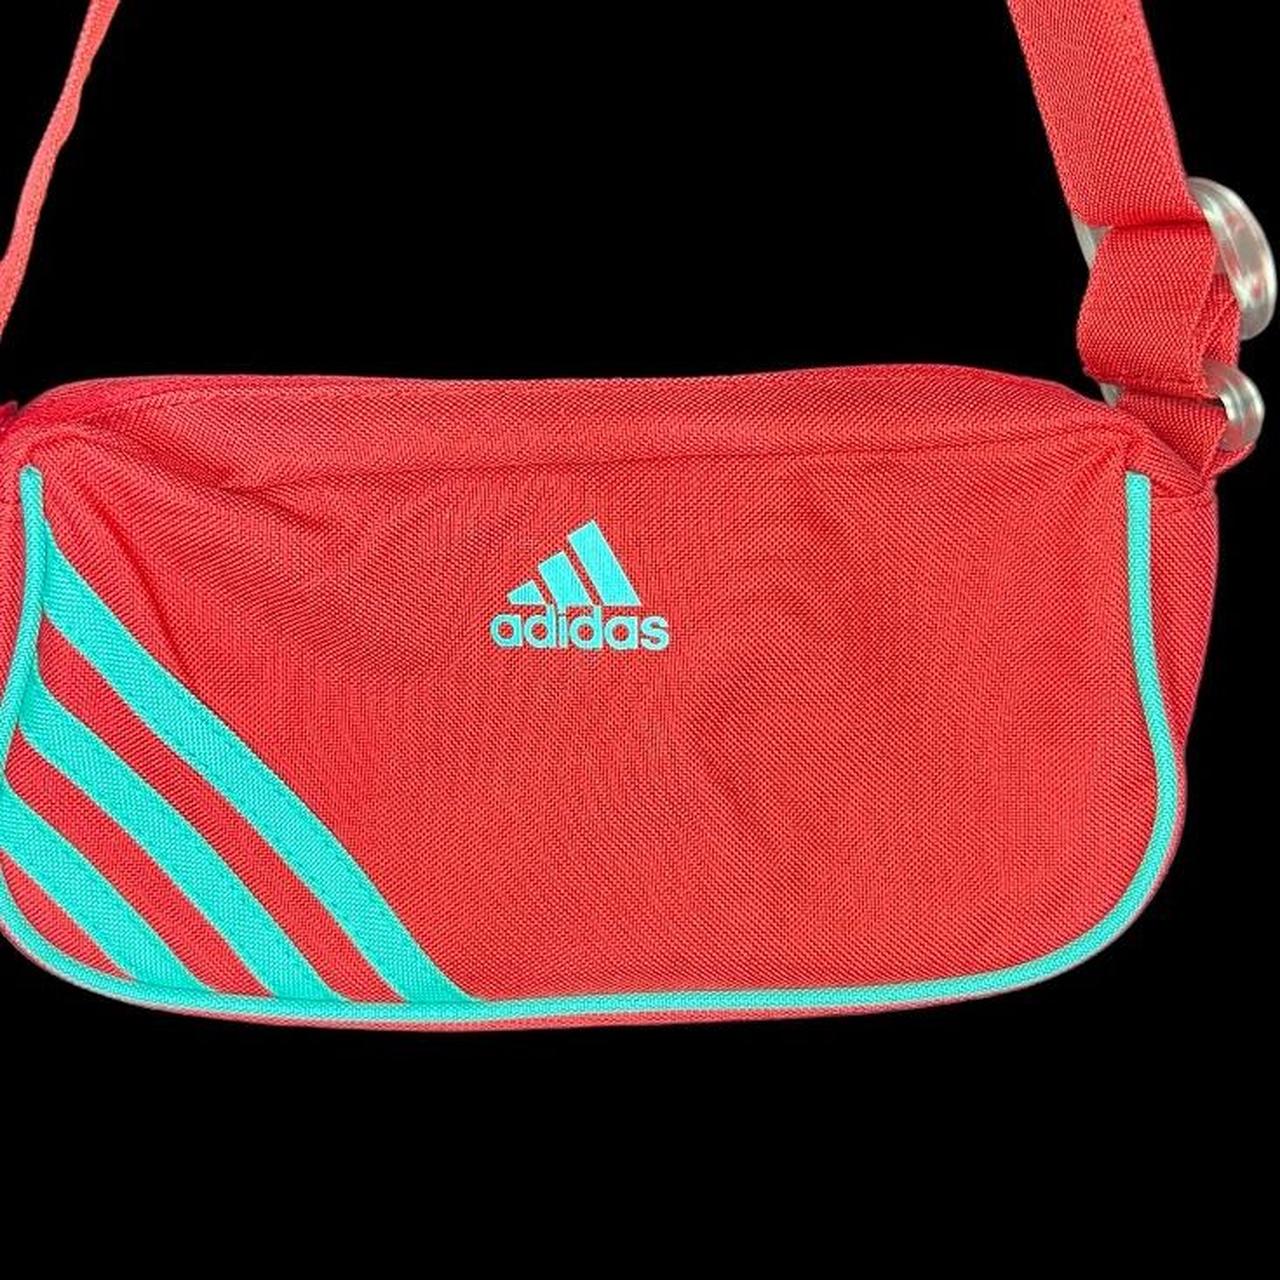 Adidas Women's Red Bag (5)